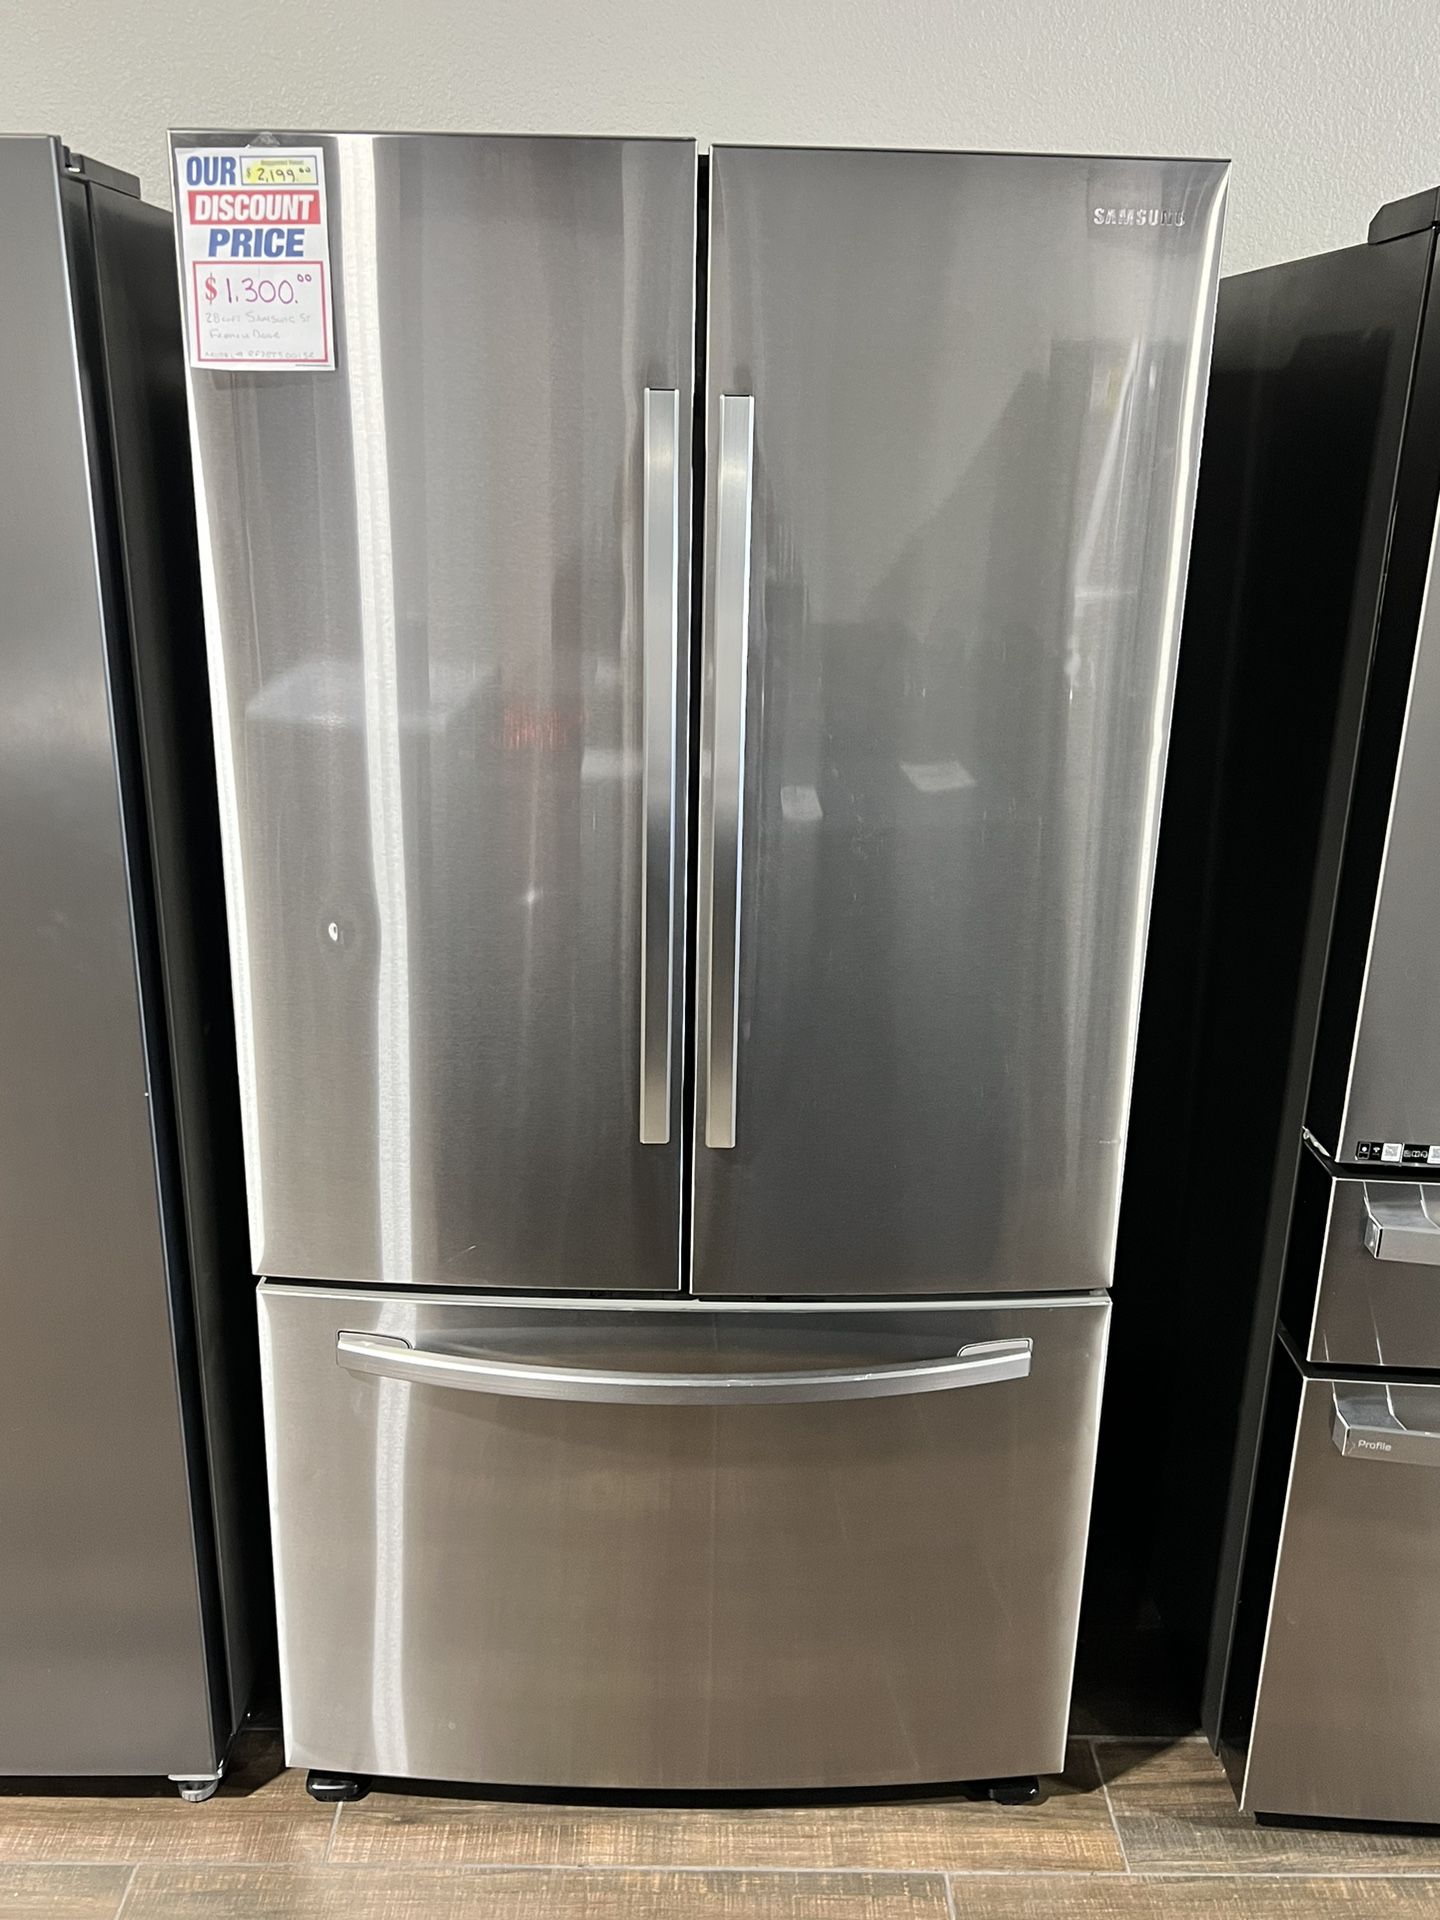 New Samsung Stainless Steel French Door Refrigerator 